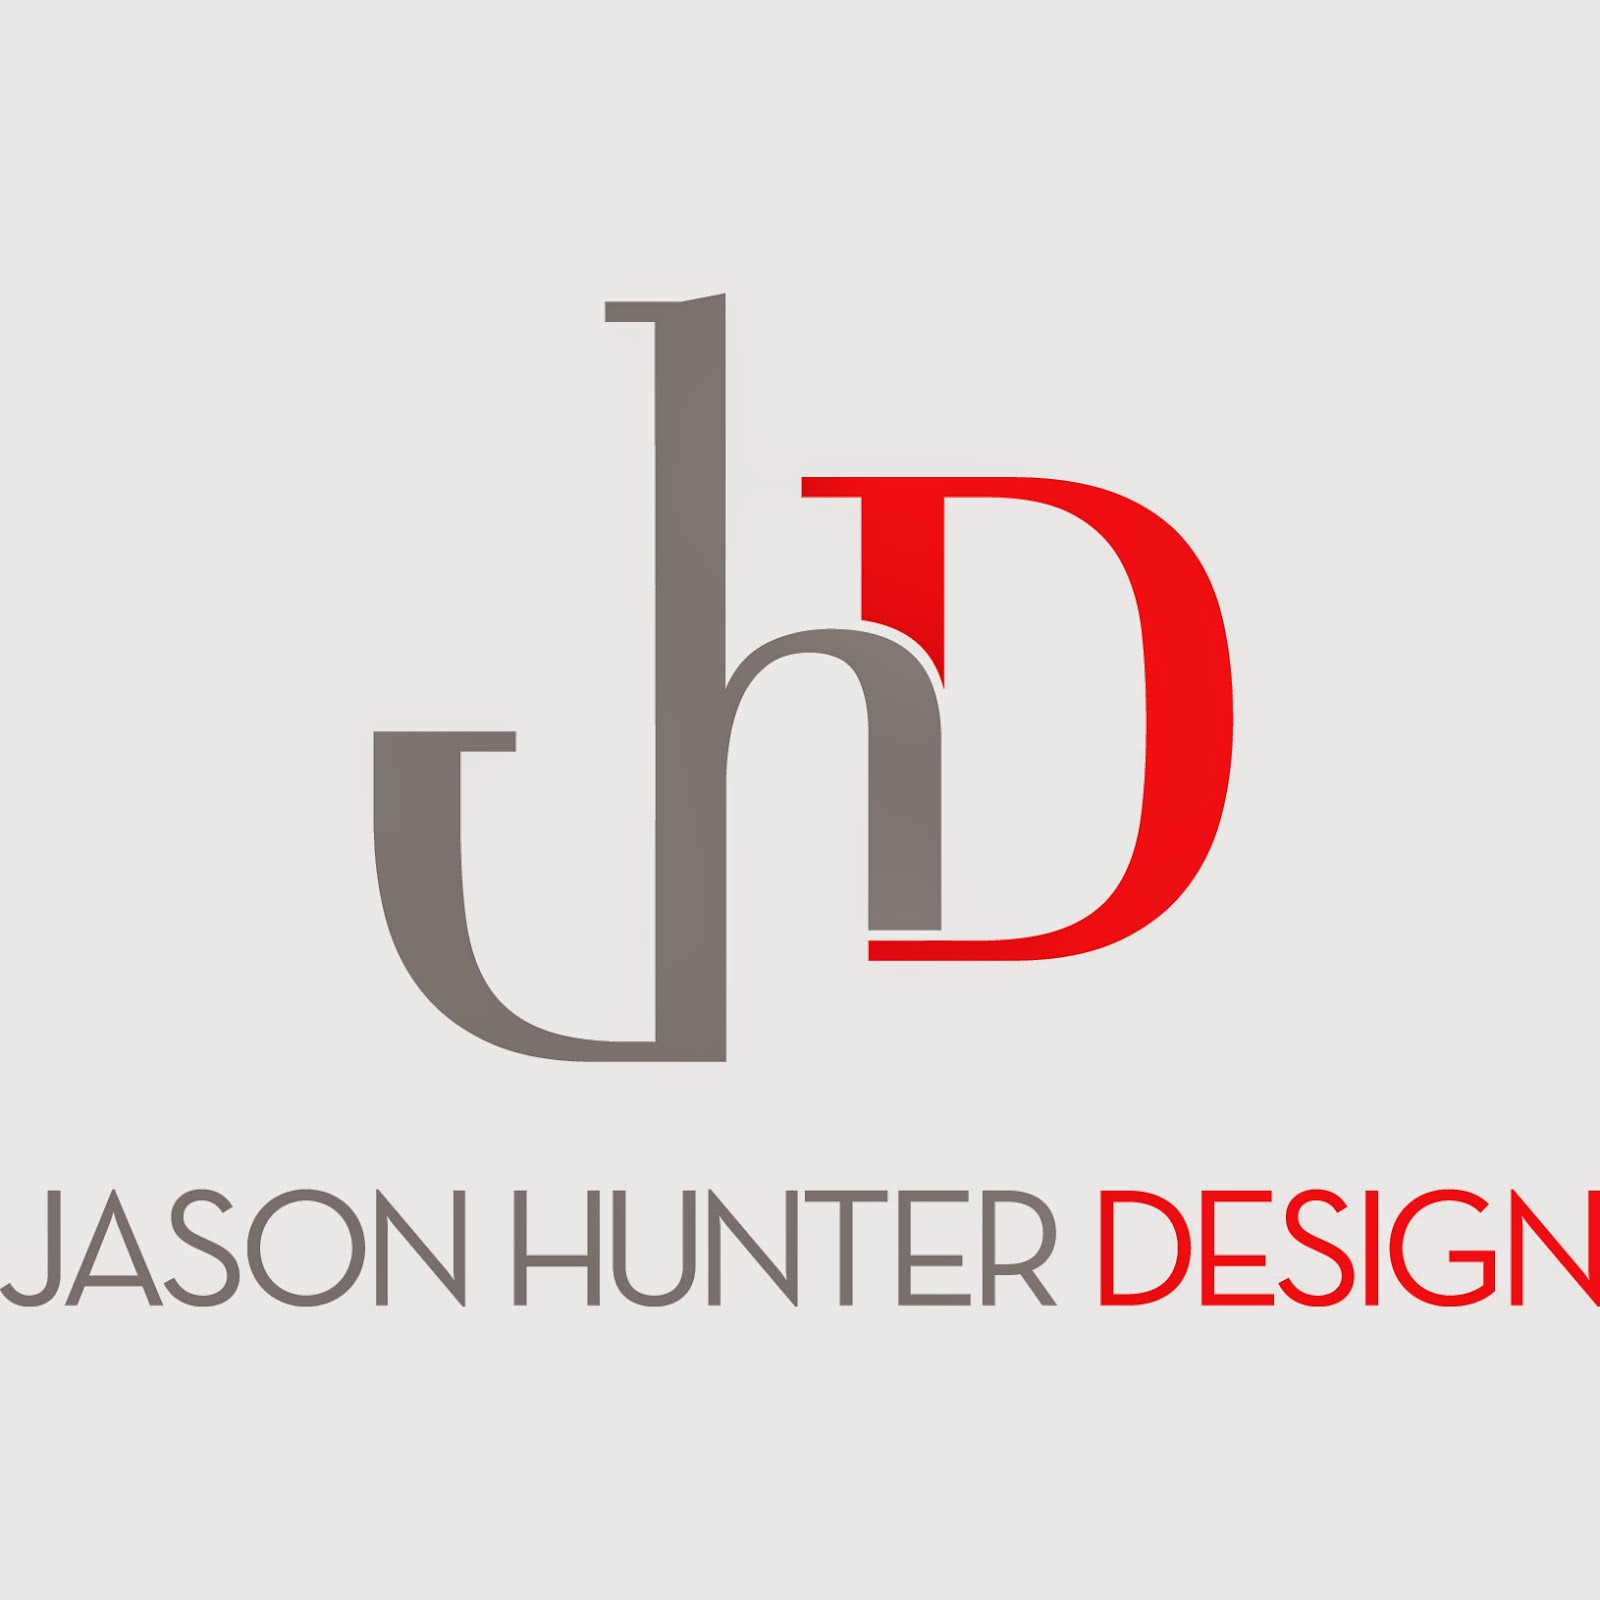 Photo of JasonHunter Design, LLC in Perth Amboy City, New Jersey, United States - 2 Picture of Point of interest, Establishment